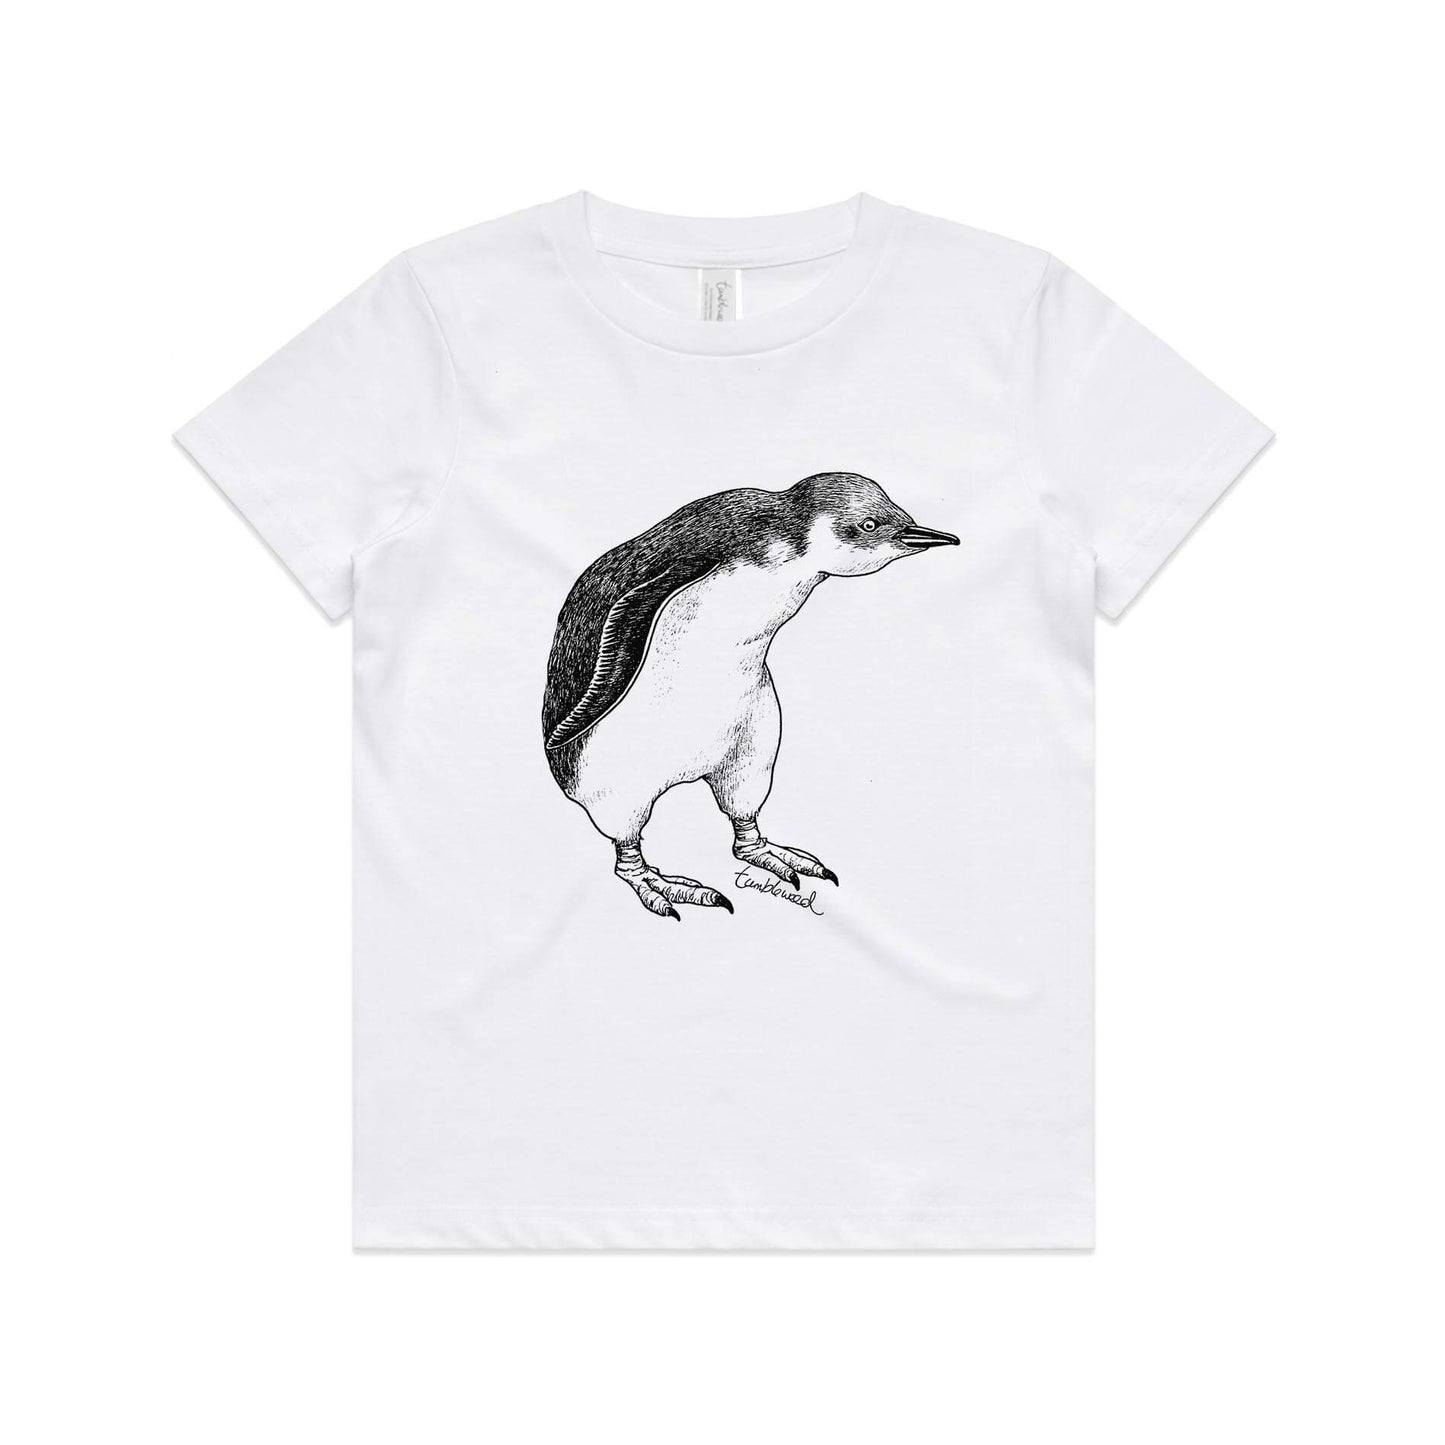 White, cotton kids' t-shirt with screen printed Kids kororā/little penguin design.